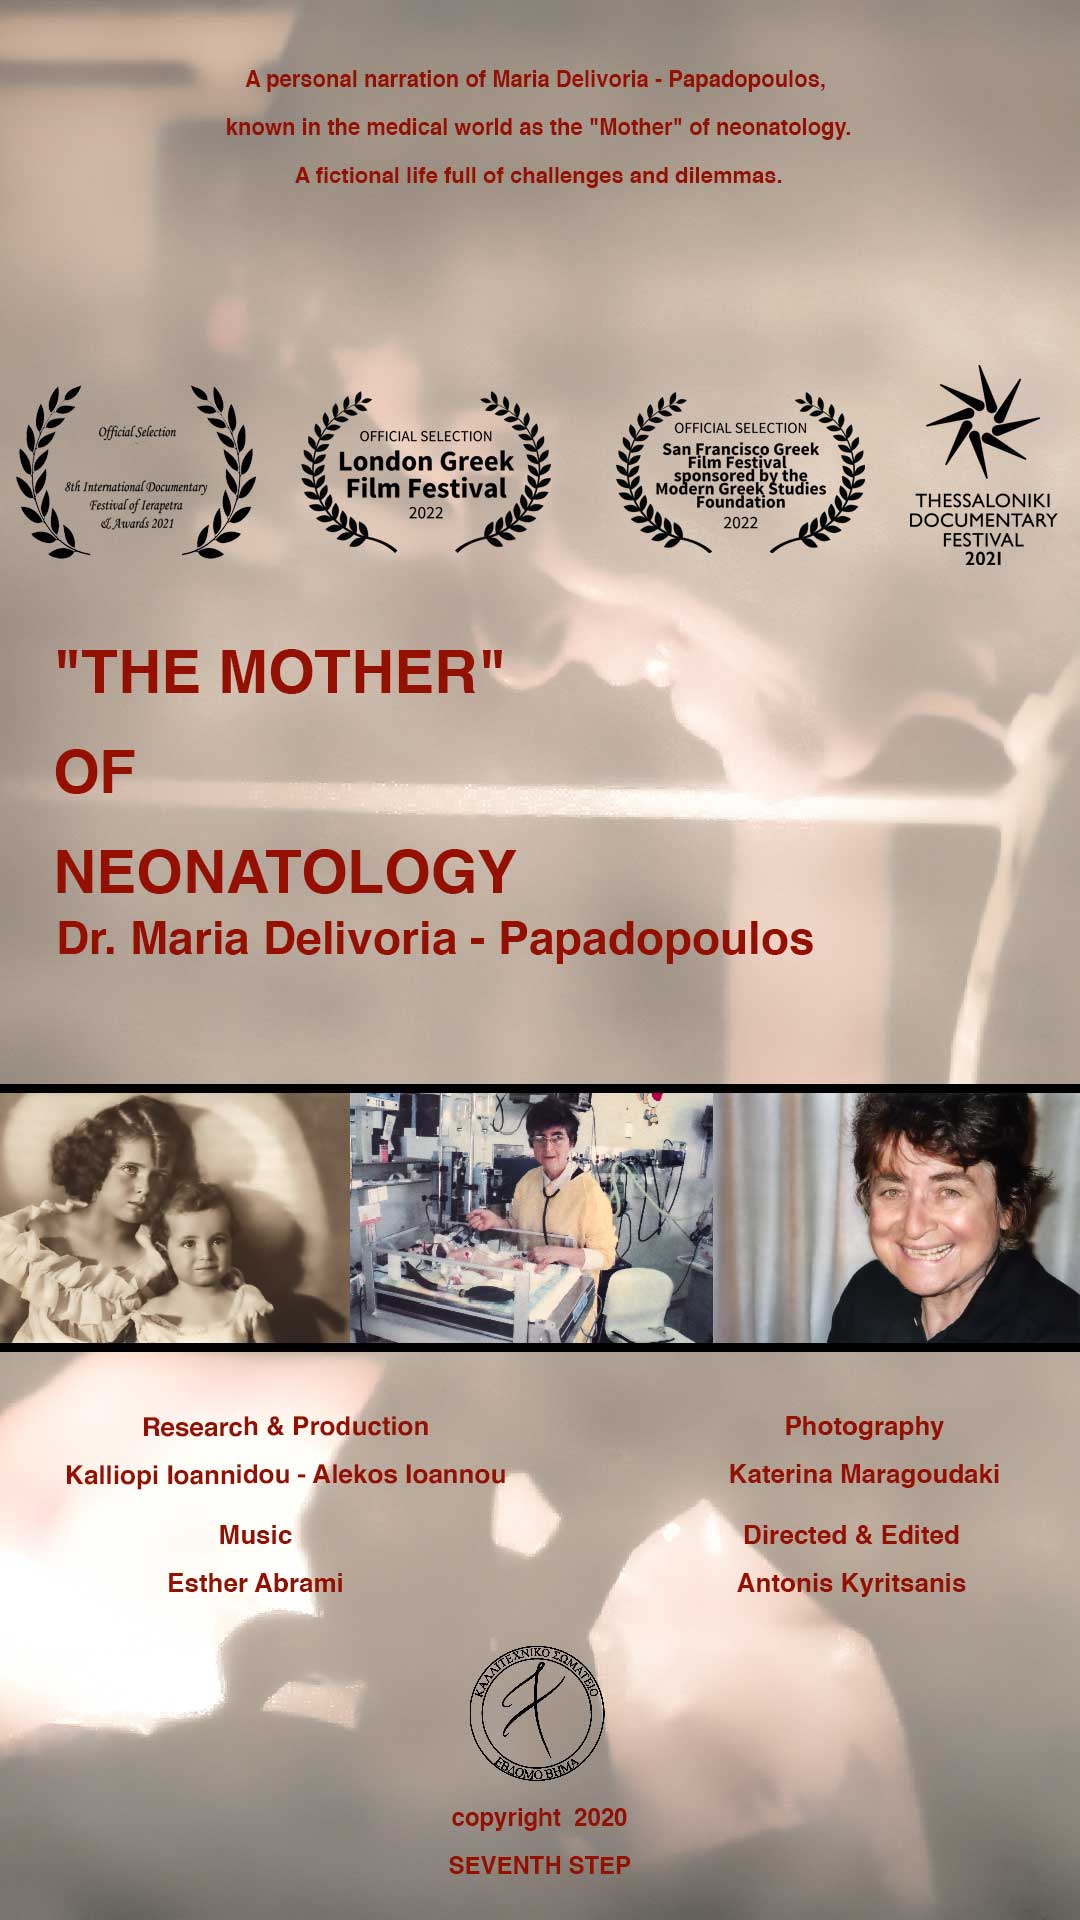 Dr. Maria Delivoria-Papadopoulos, the "Mother" of Neonatology